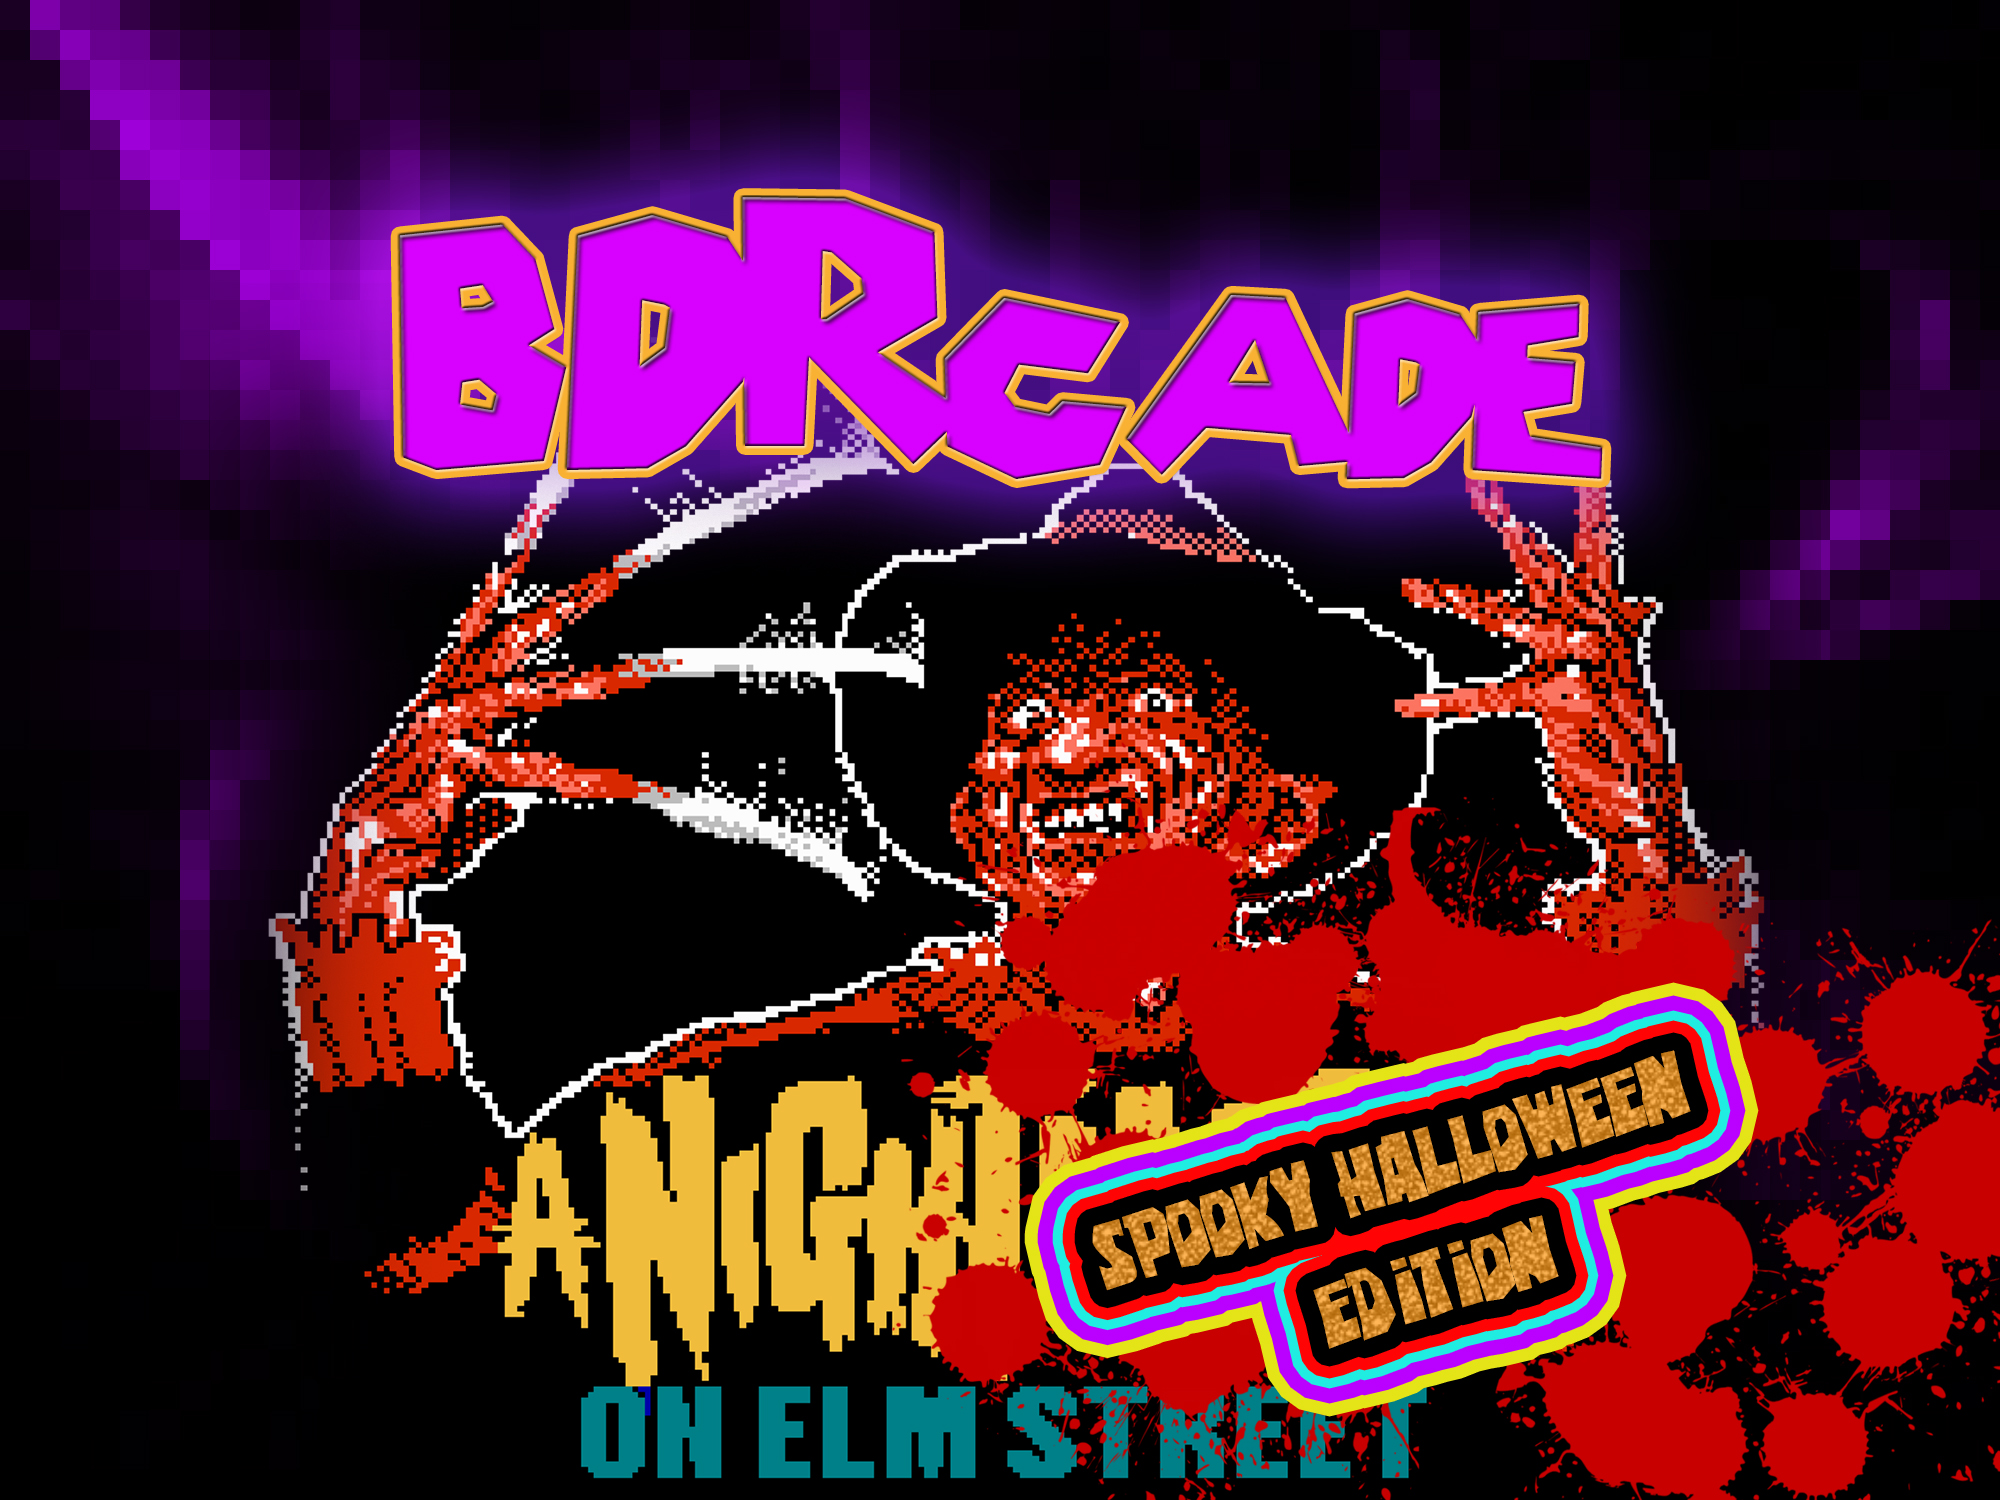 A Nightmare on Elm Street – Spooky Halloween Edition – BDRcade